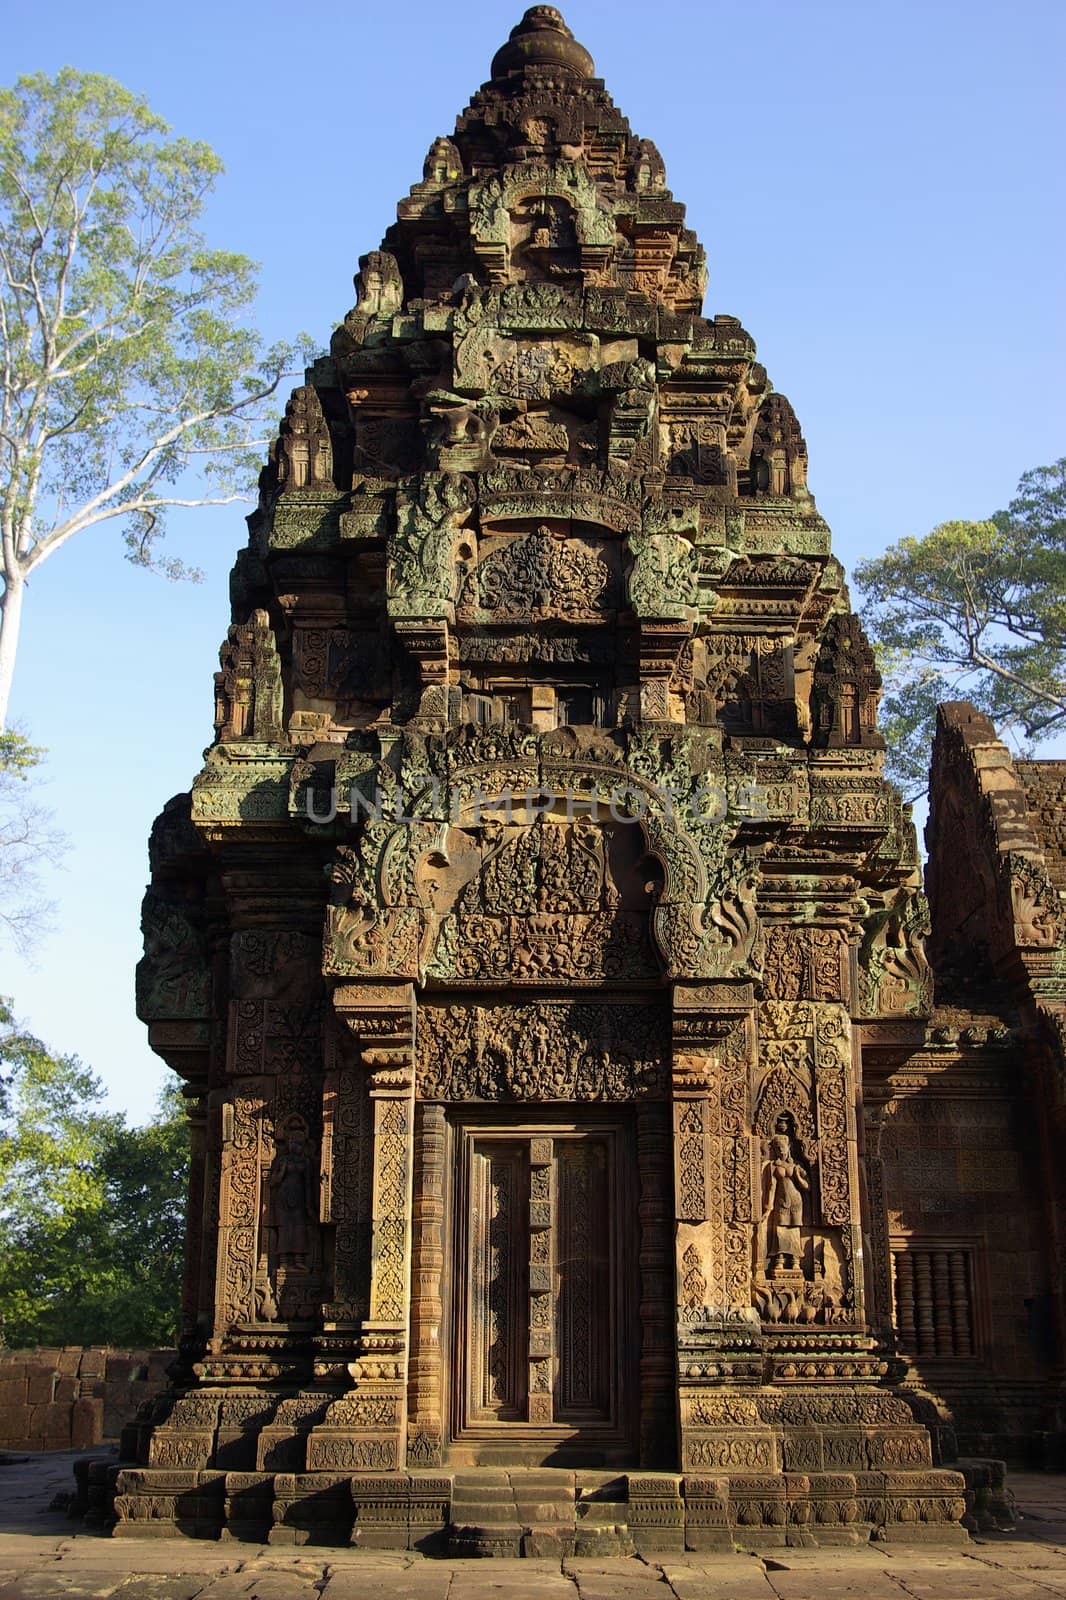 It's a tower of the Prasat Kravan temple in Angkor